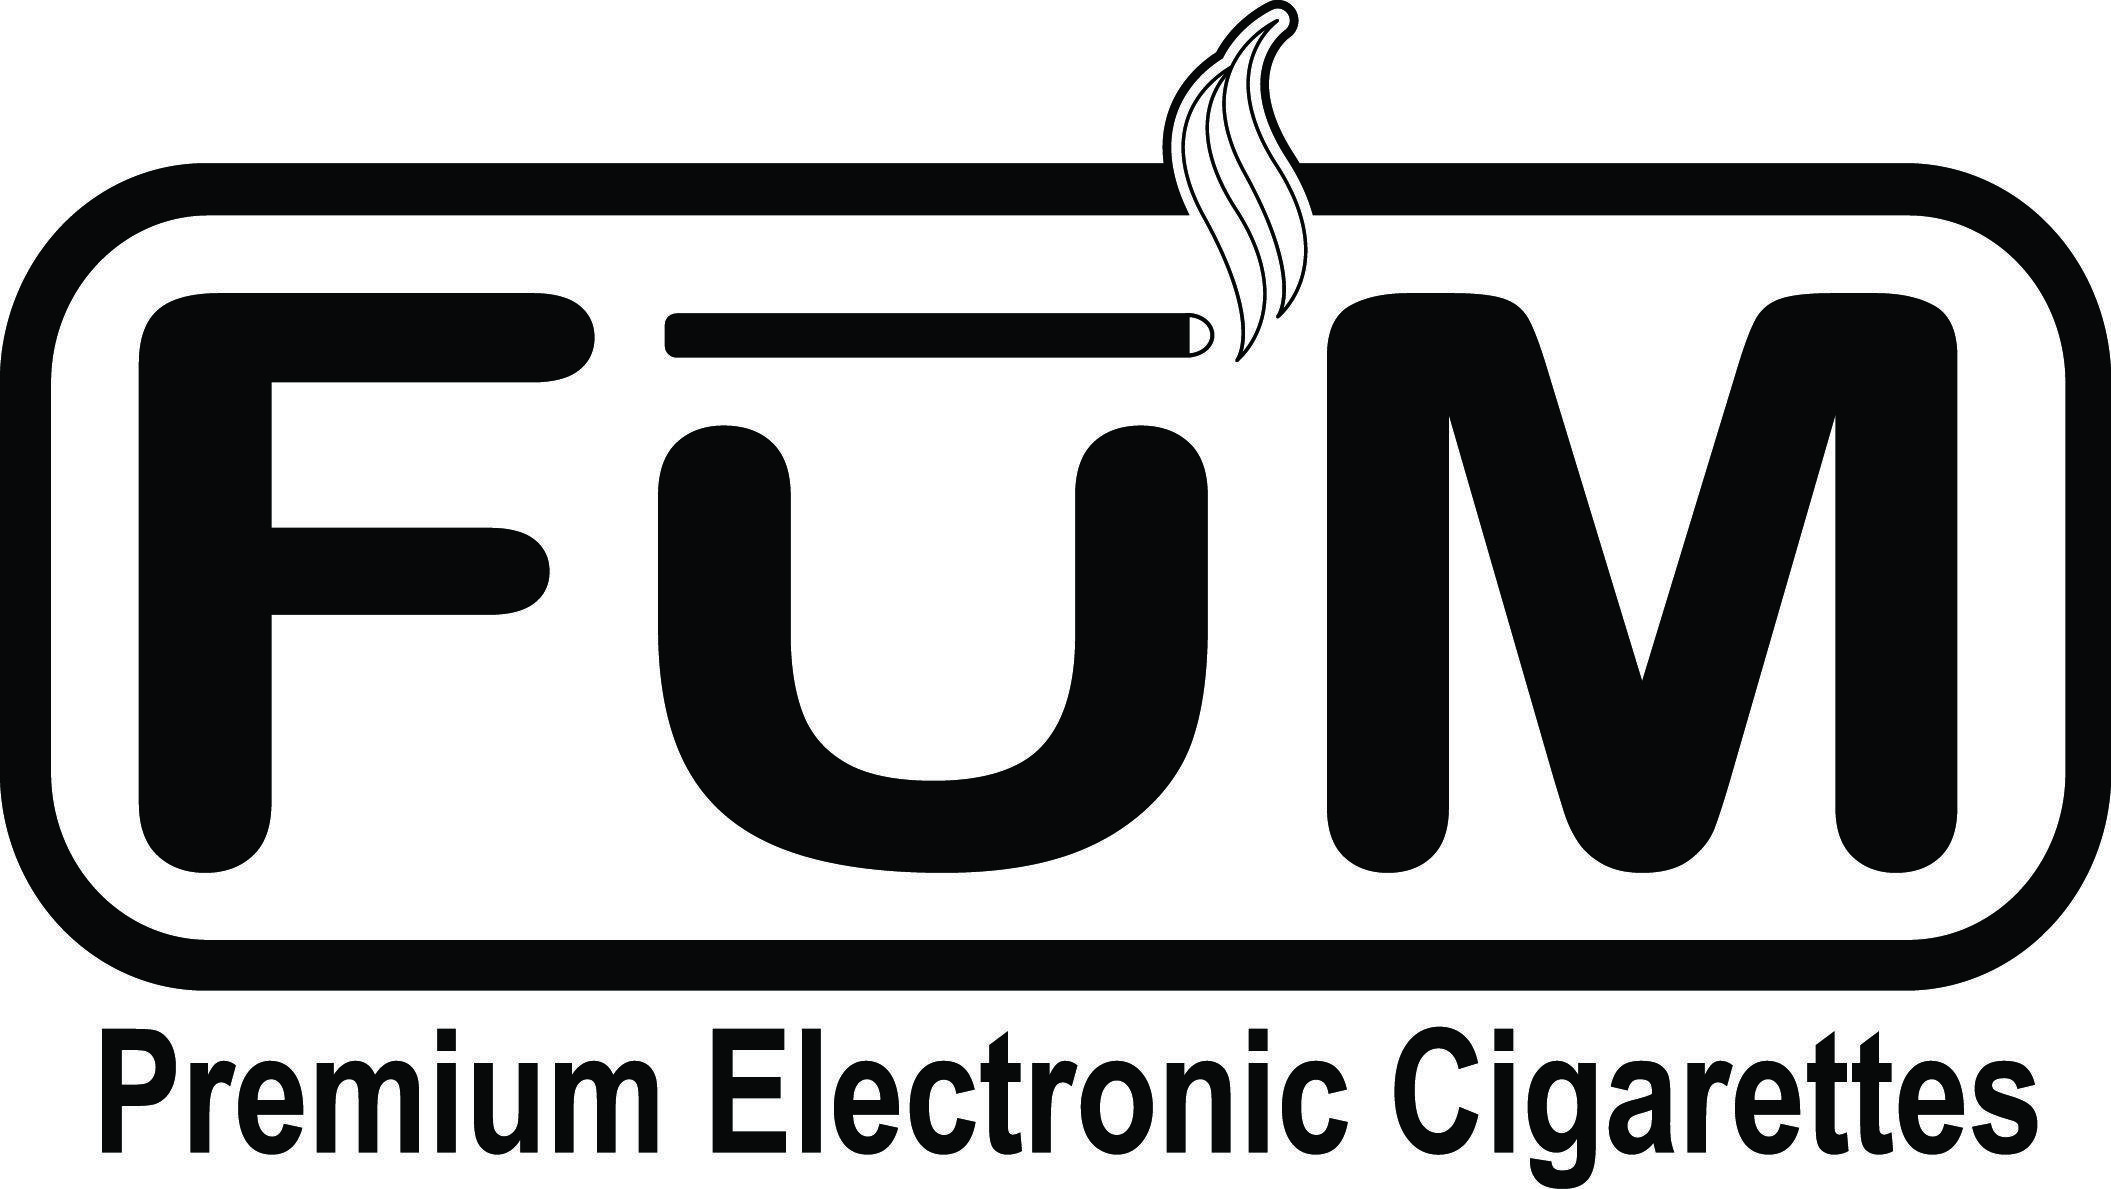 Black and White Electronic Logo - FuM logo black & white - World Vapor ExpoWorld Vapor Expo